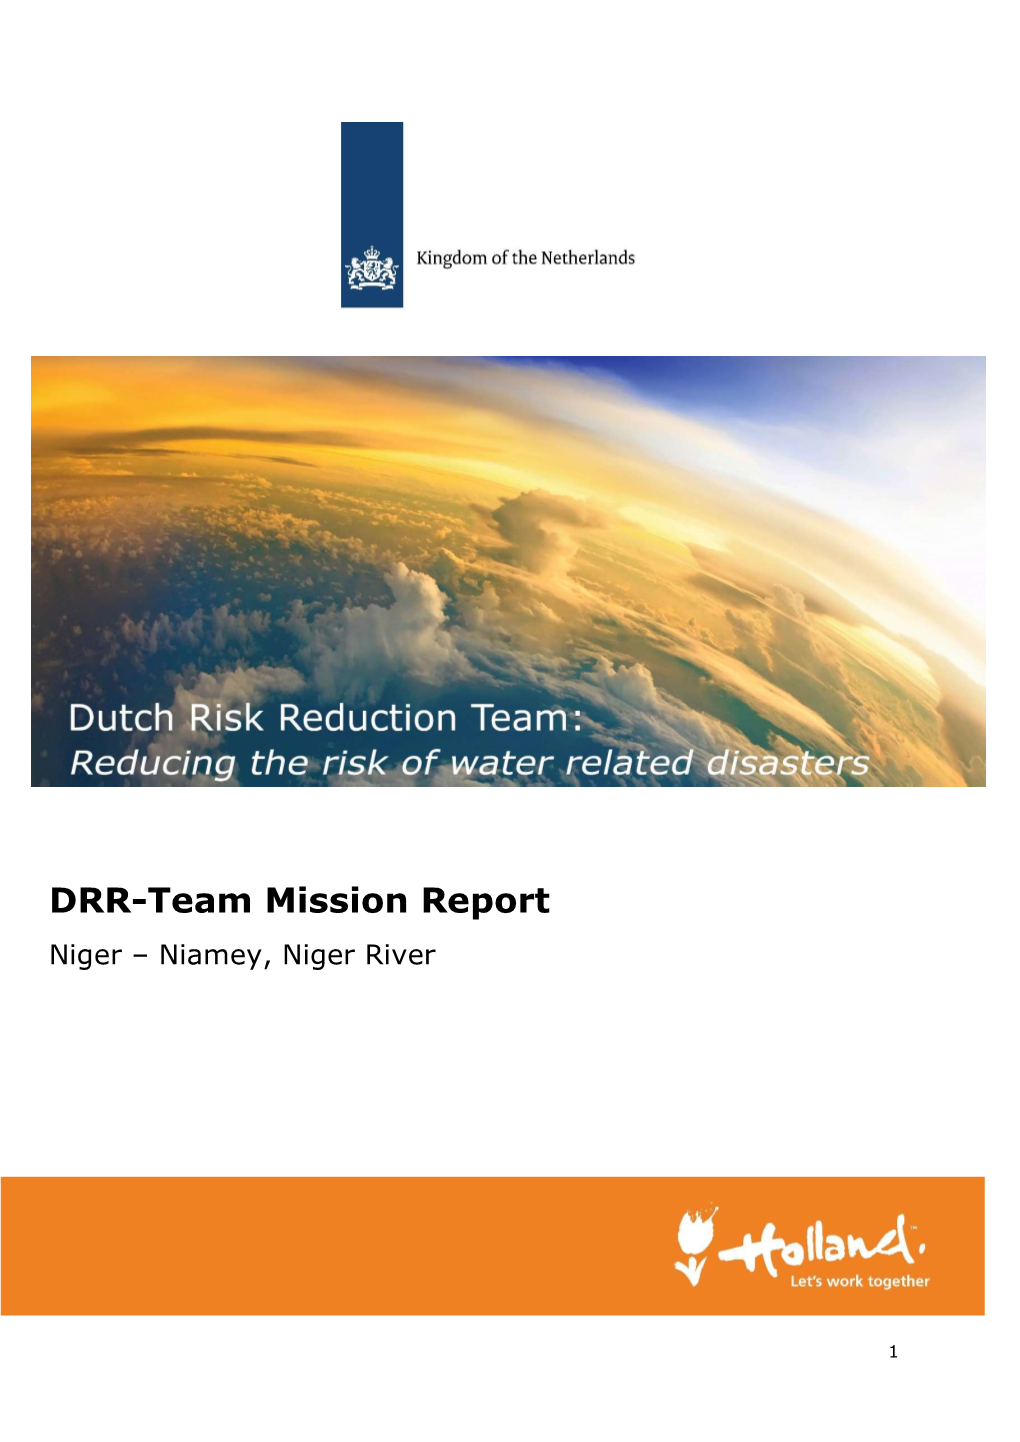 DRR-Team Mission Report Niger – Niamey, Niger River